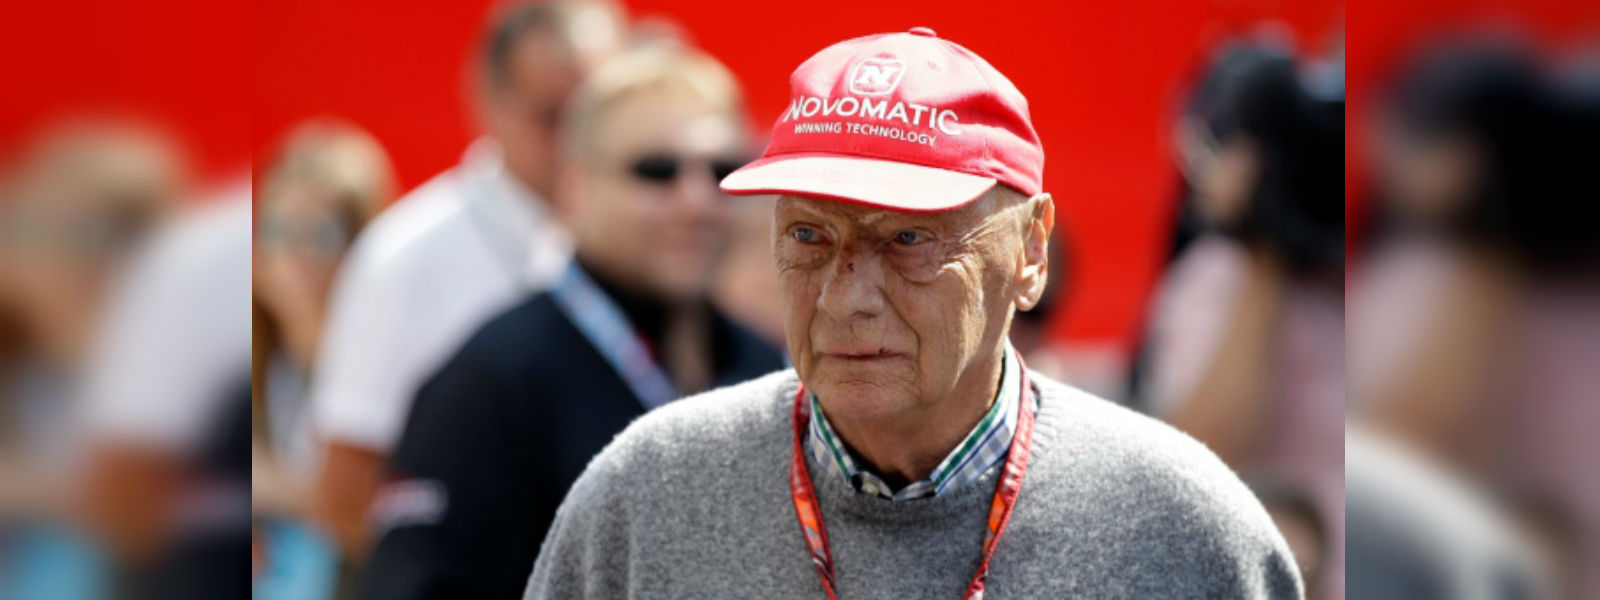 Motor racing-Former F1 champion Lauda dies